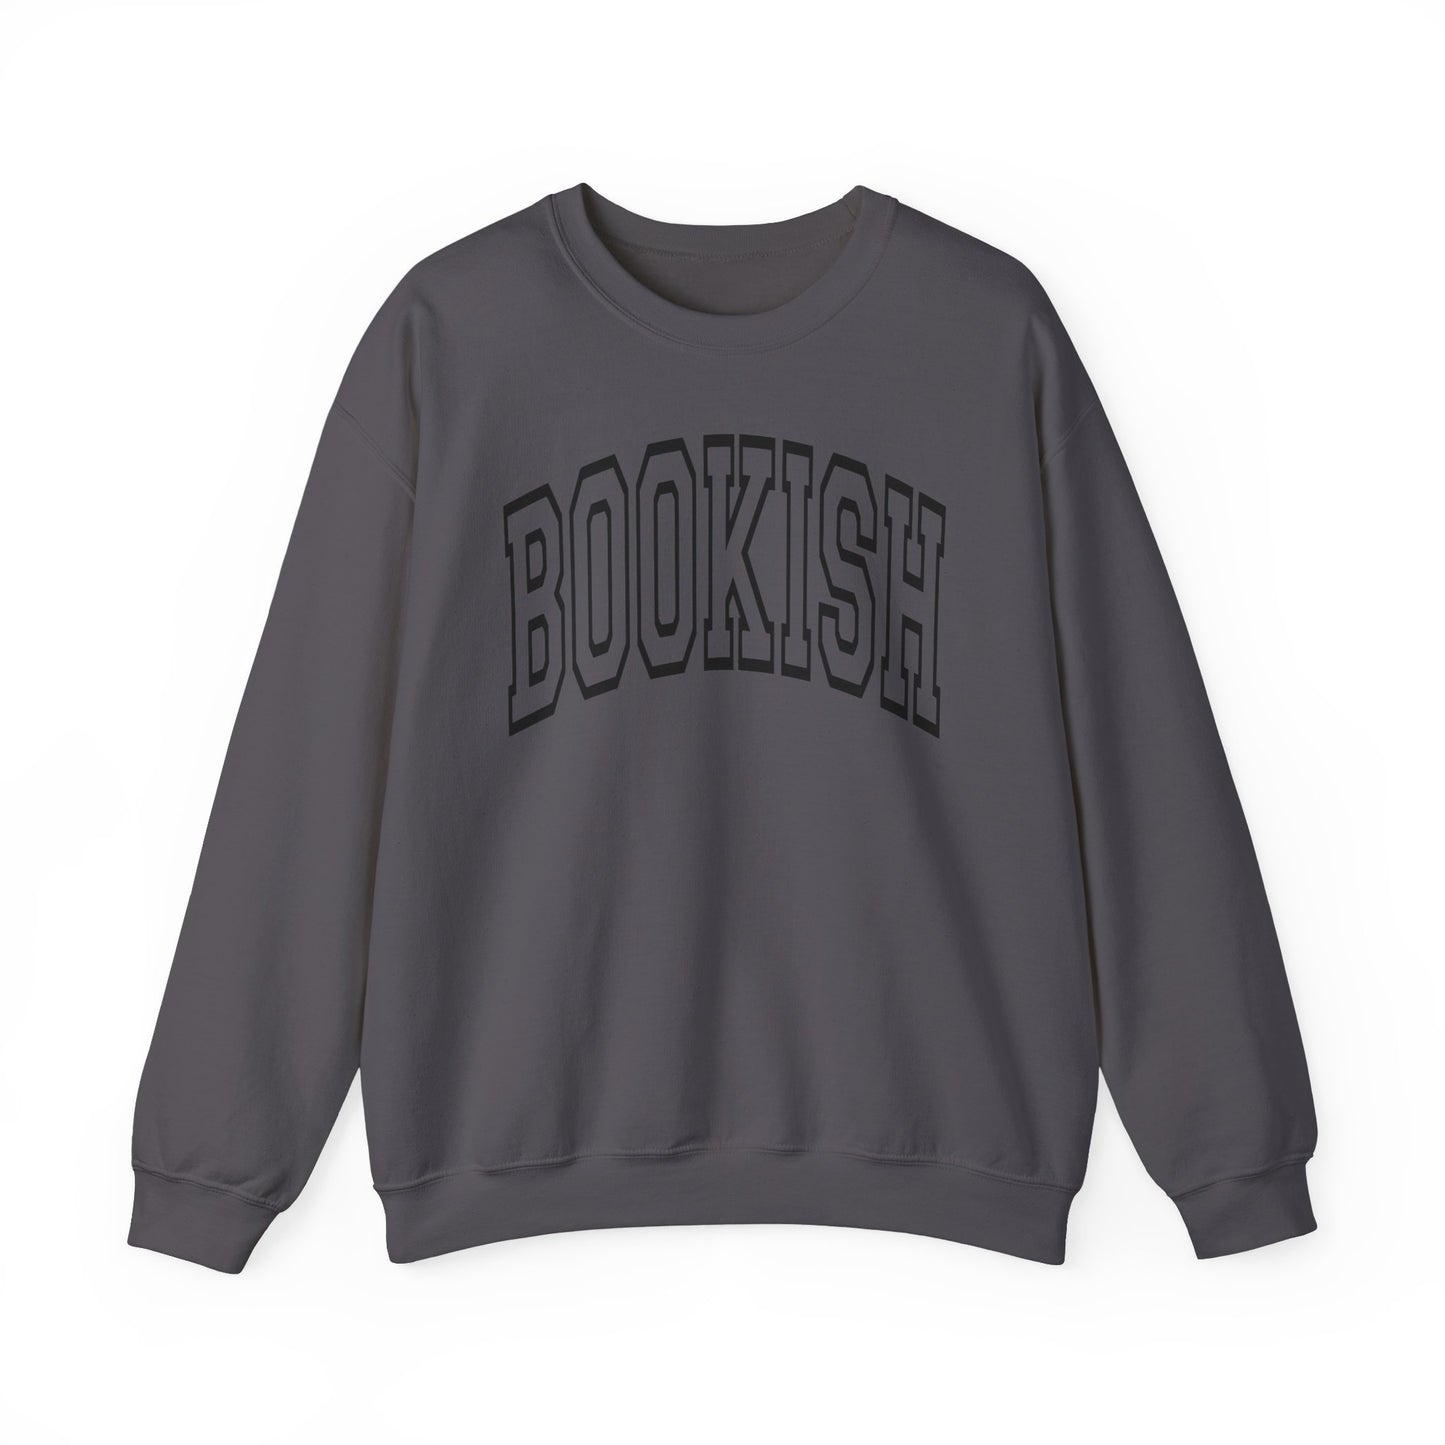 Bookish Crewneck Sweatshirt